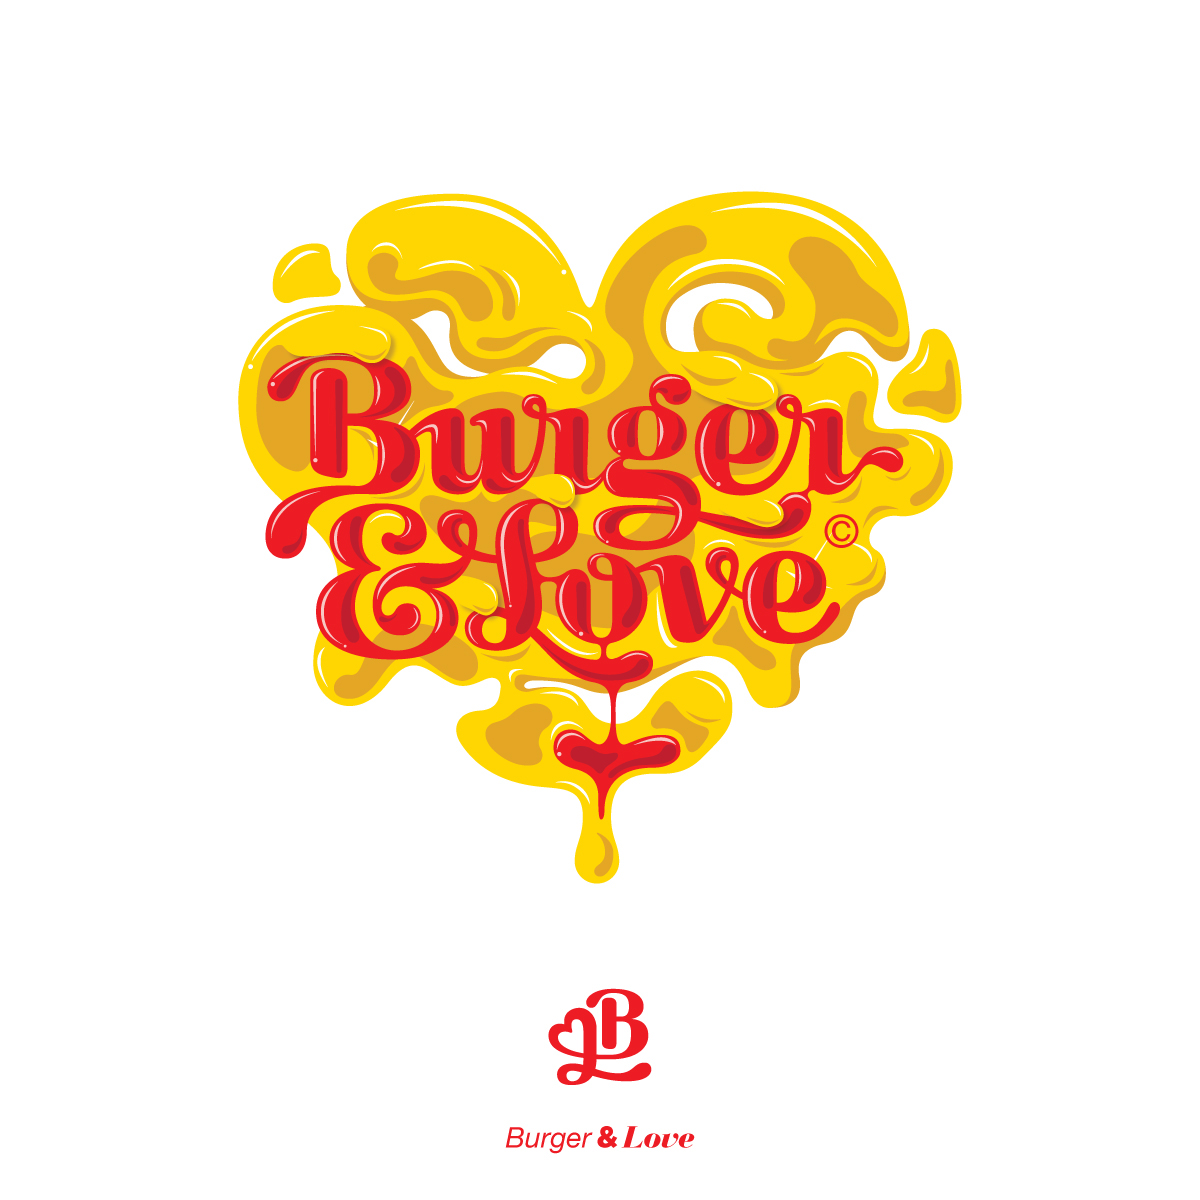 burger burger identity Burger Logo burger packaging script logo streetfood Fast food fastfood streetfood brand brand burger brand kissmiklos budapest